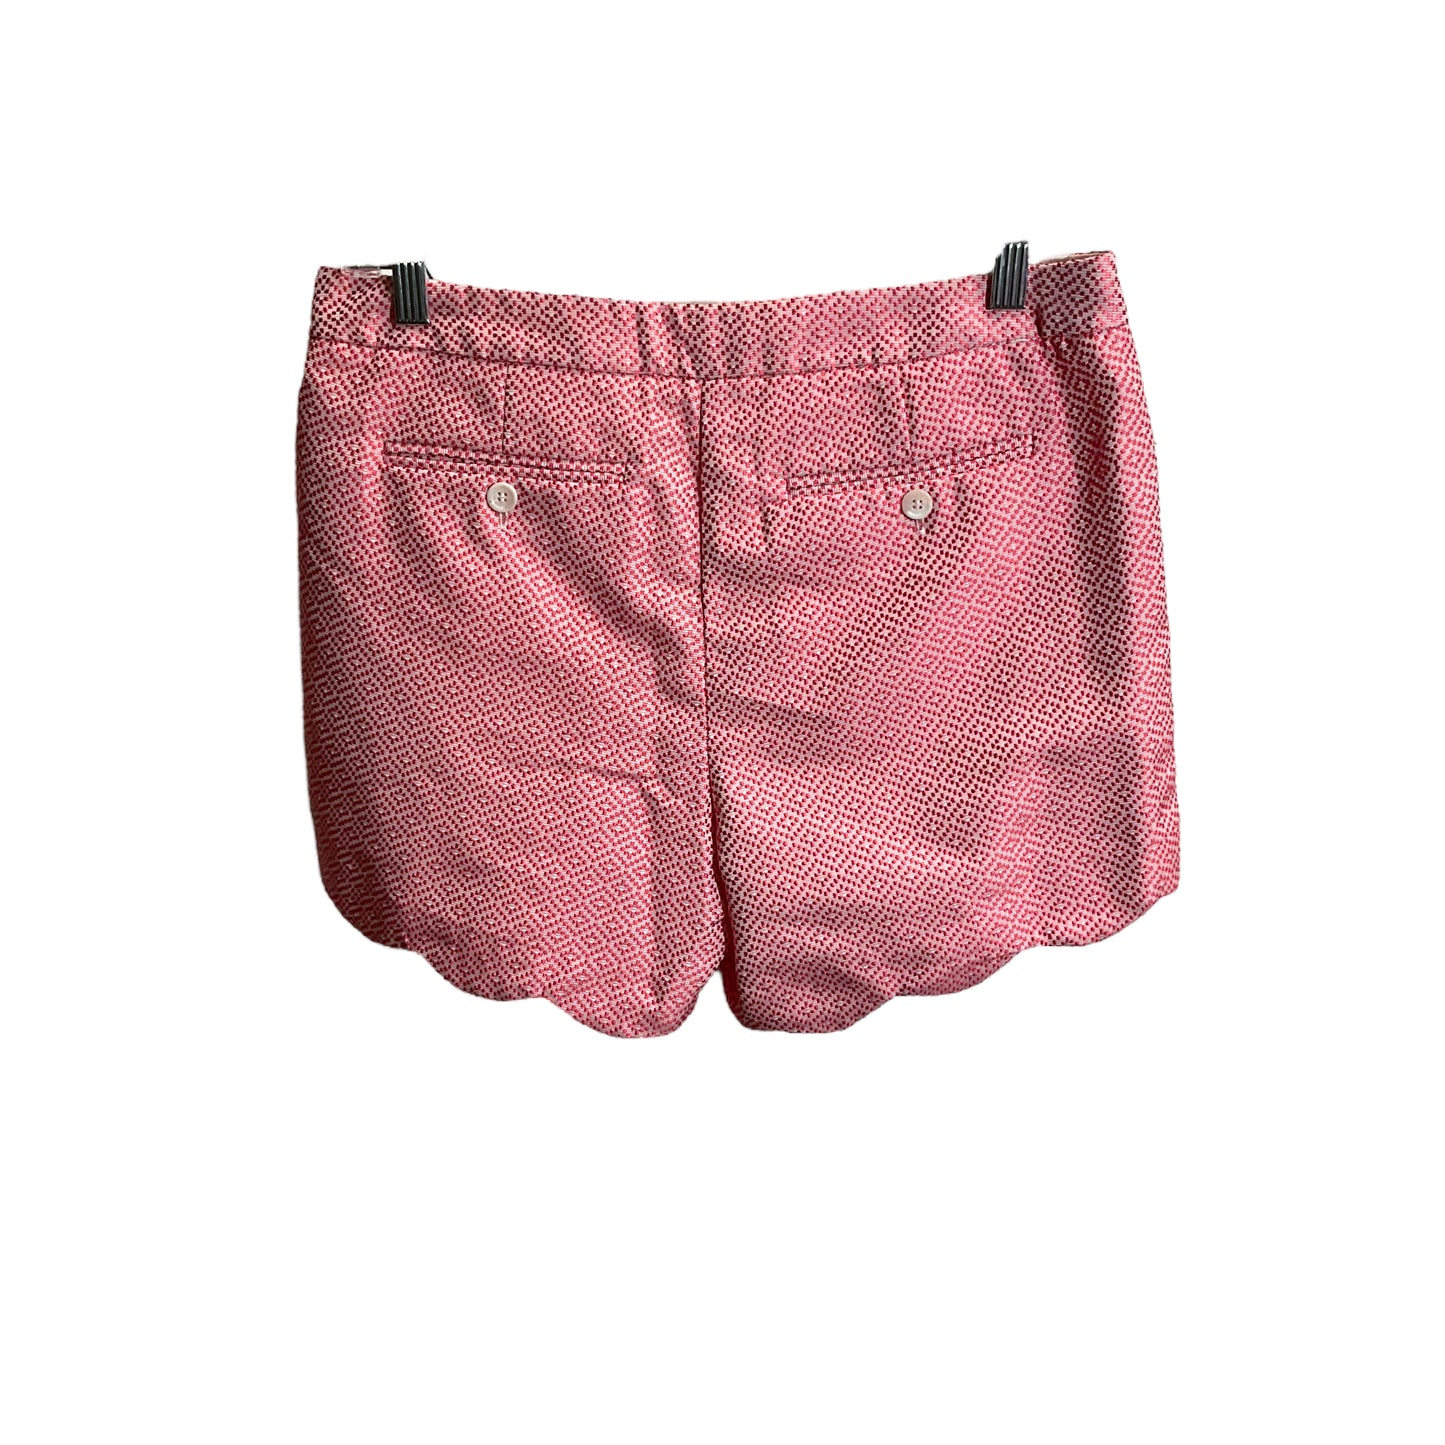 Shorts By Kenar  Size: 8